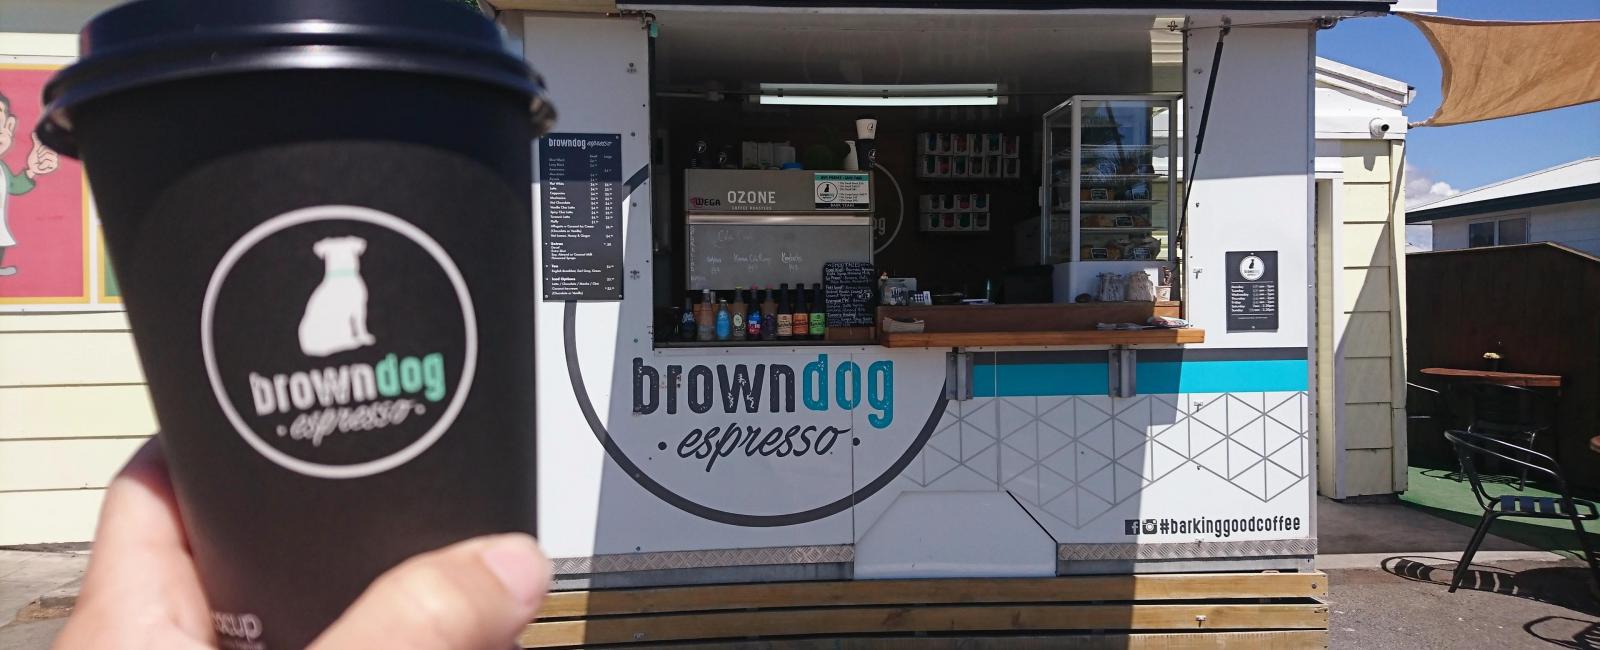 Brown Dog Espresso